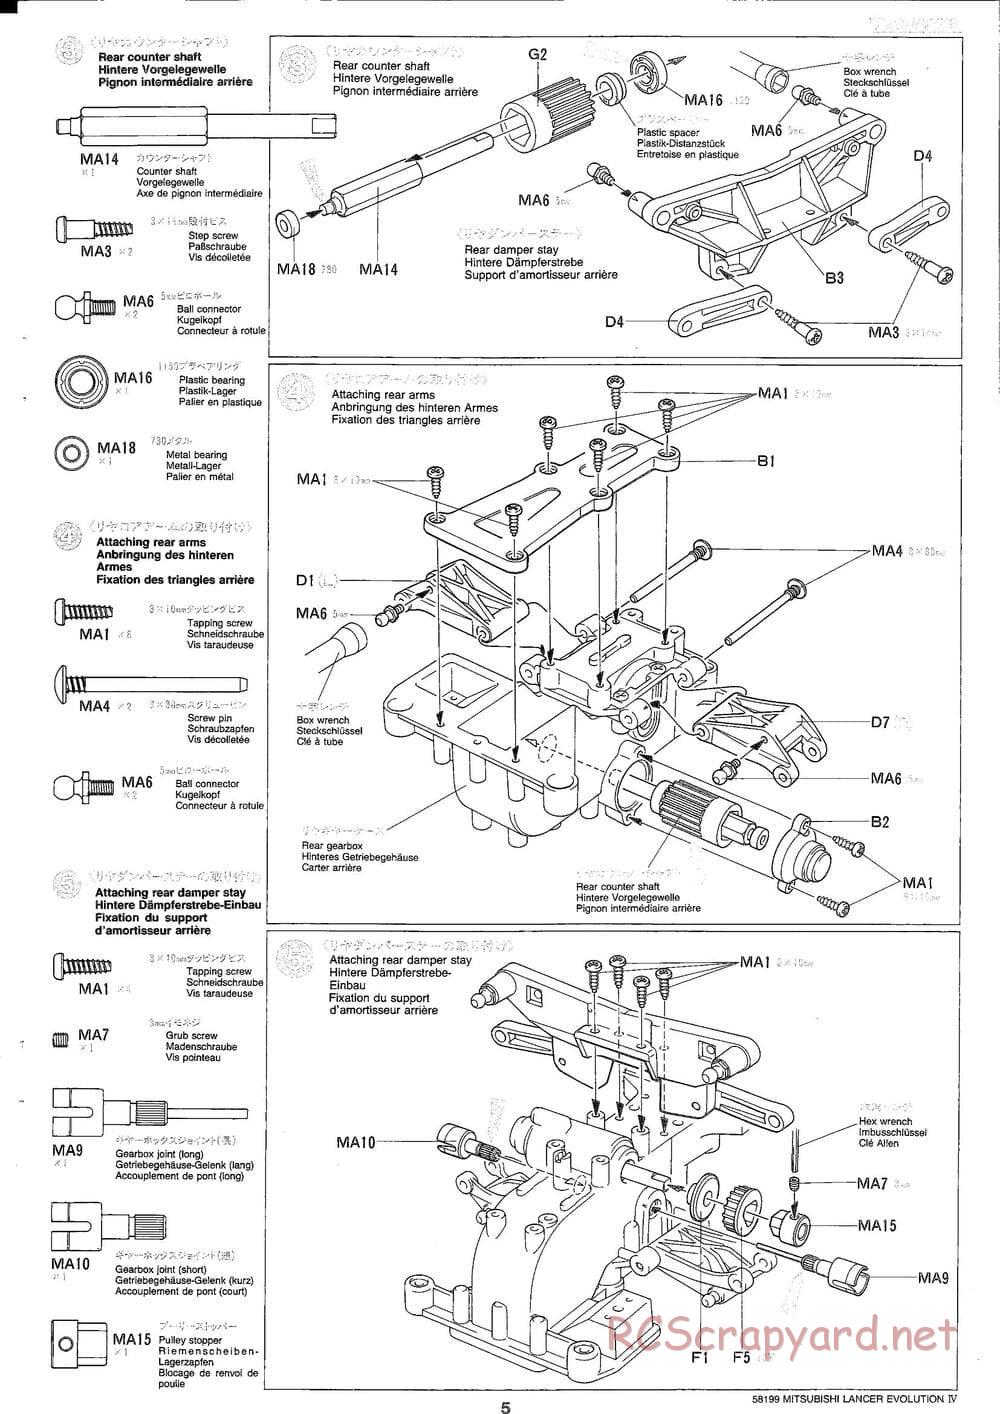 Tamiya - Mitsubishi Lancer Evolution IV - TA-03F Chassis - Manual - Page 5